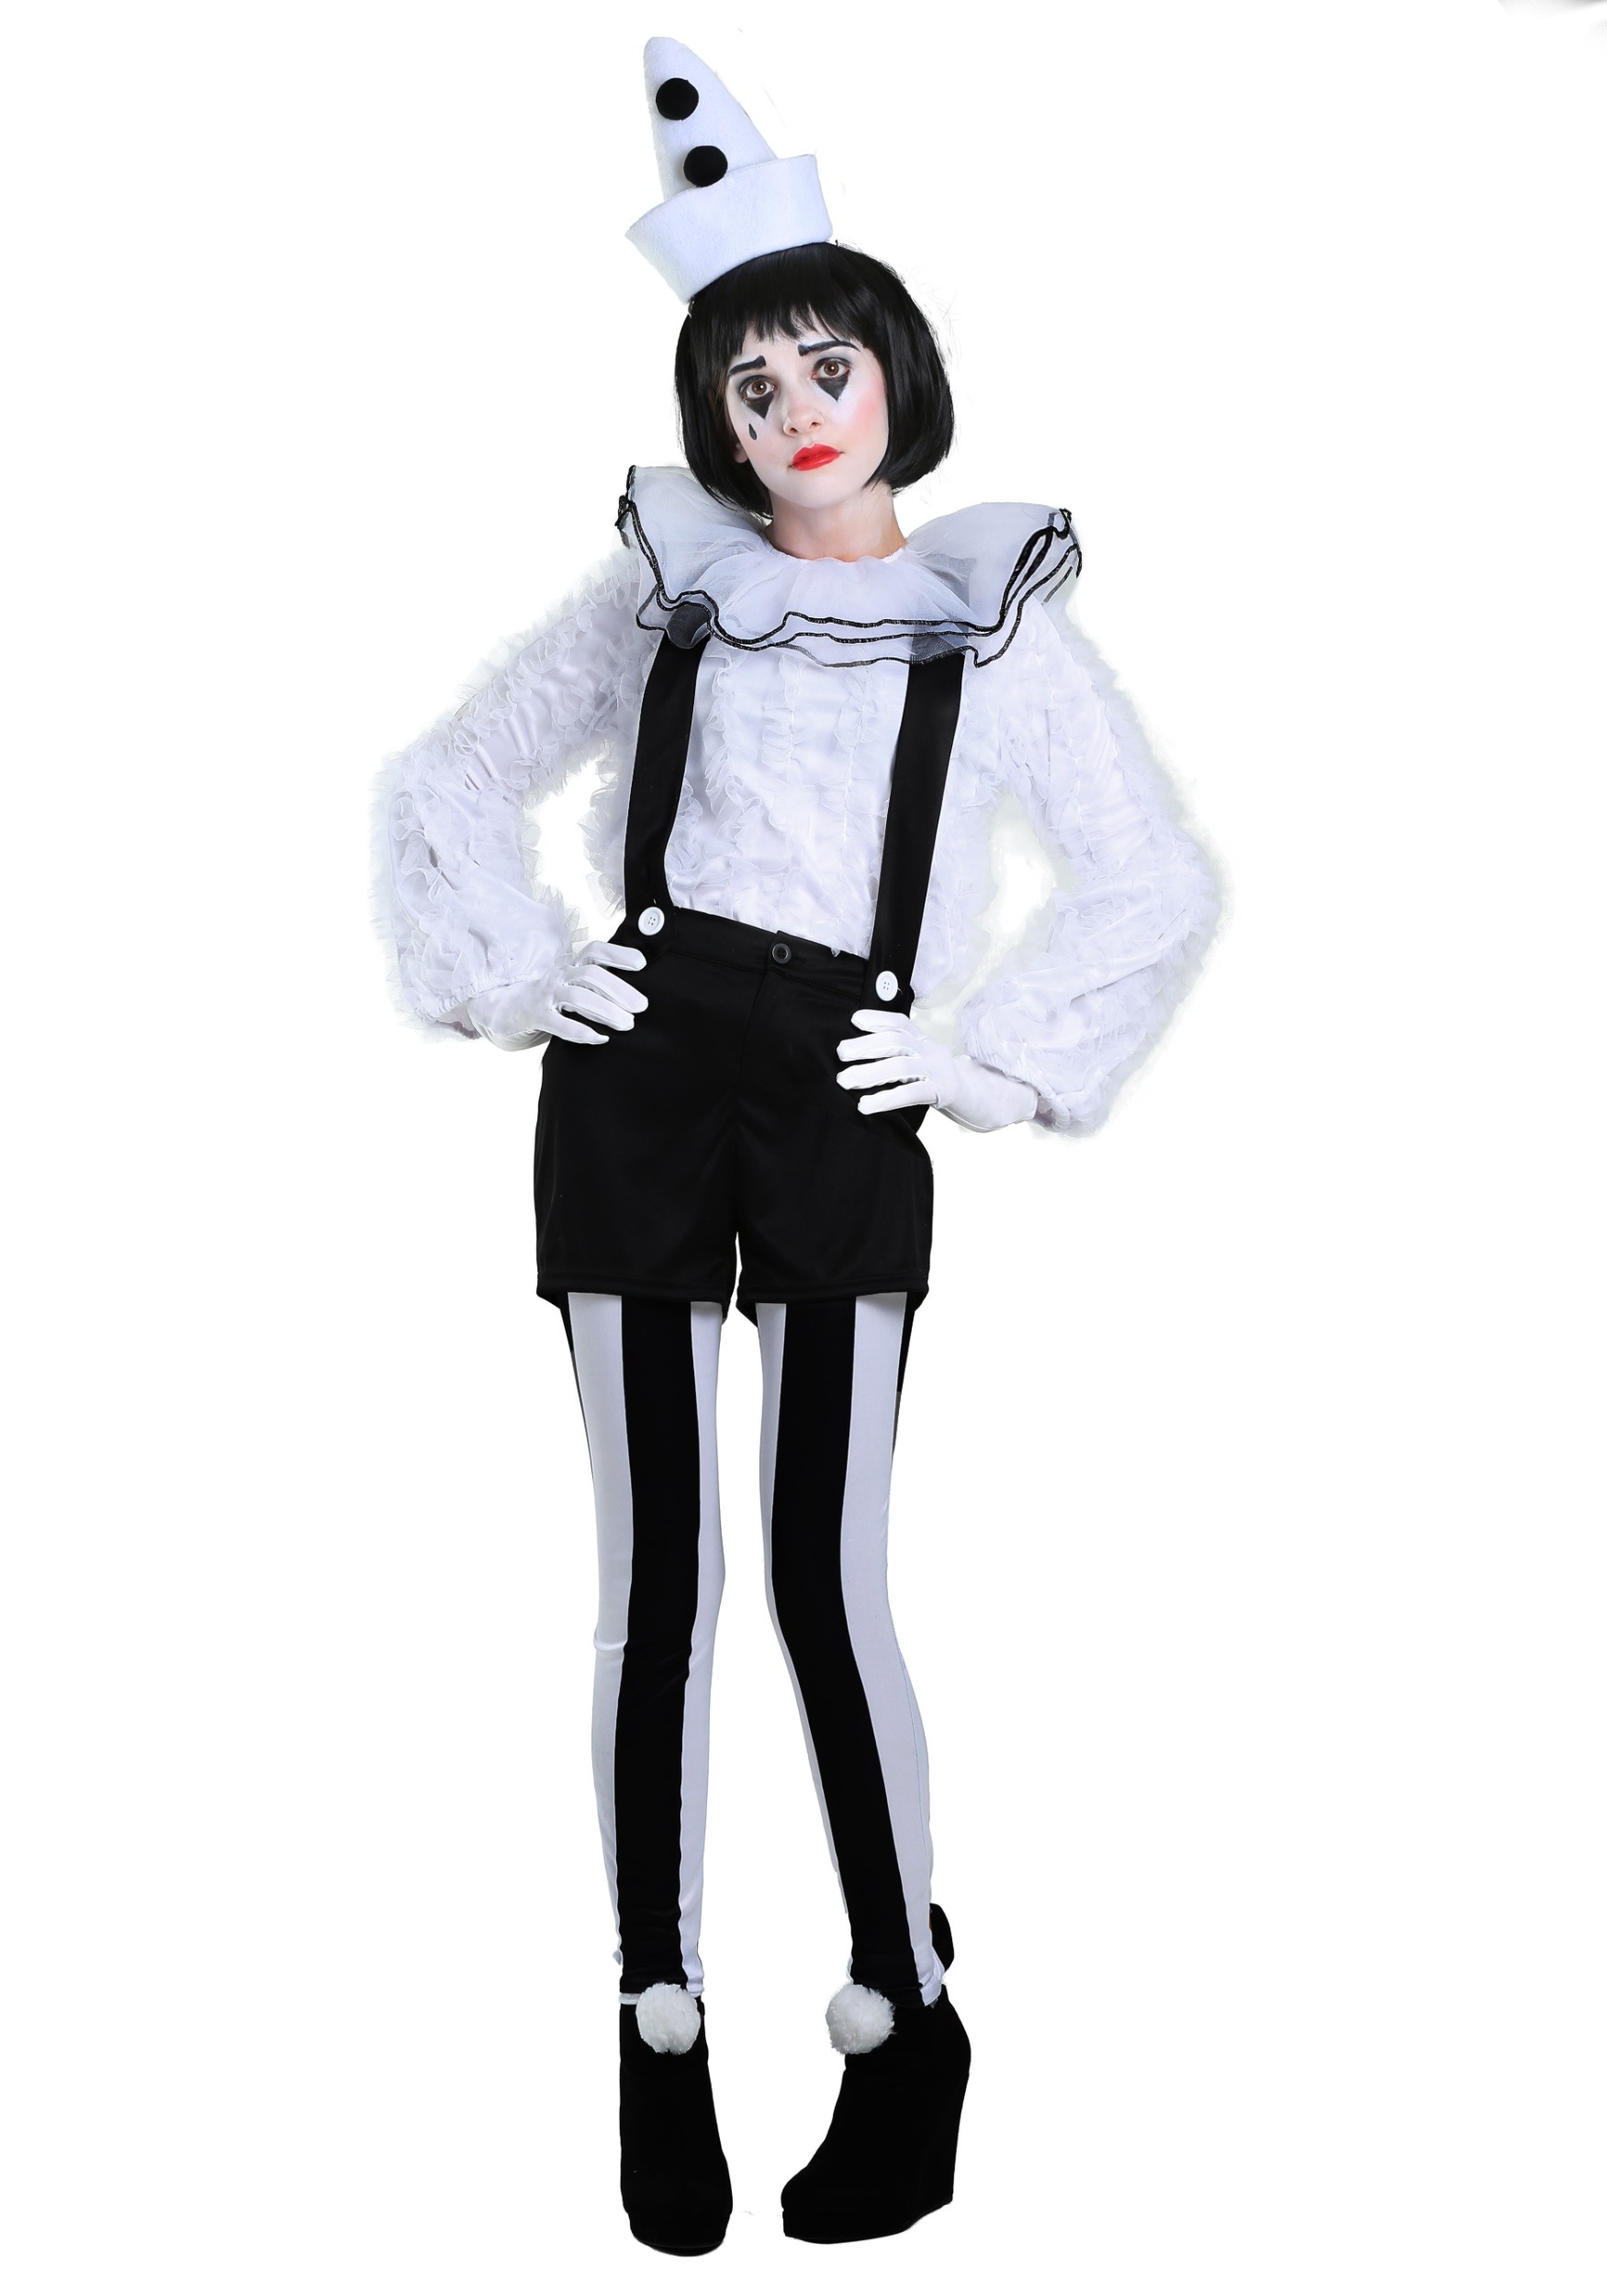 Photos - Fancy Dress Vintage FUN Costumes  Pierrot Clown Costume for Women Black/White FUN36 